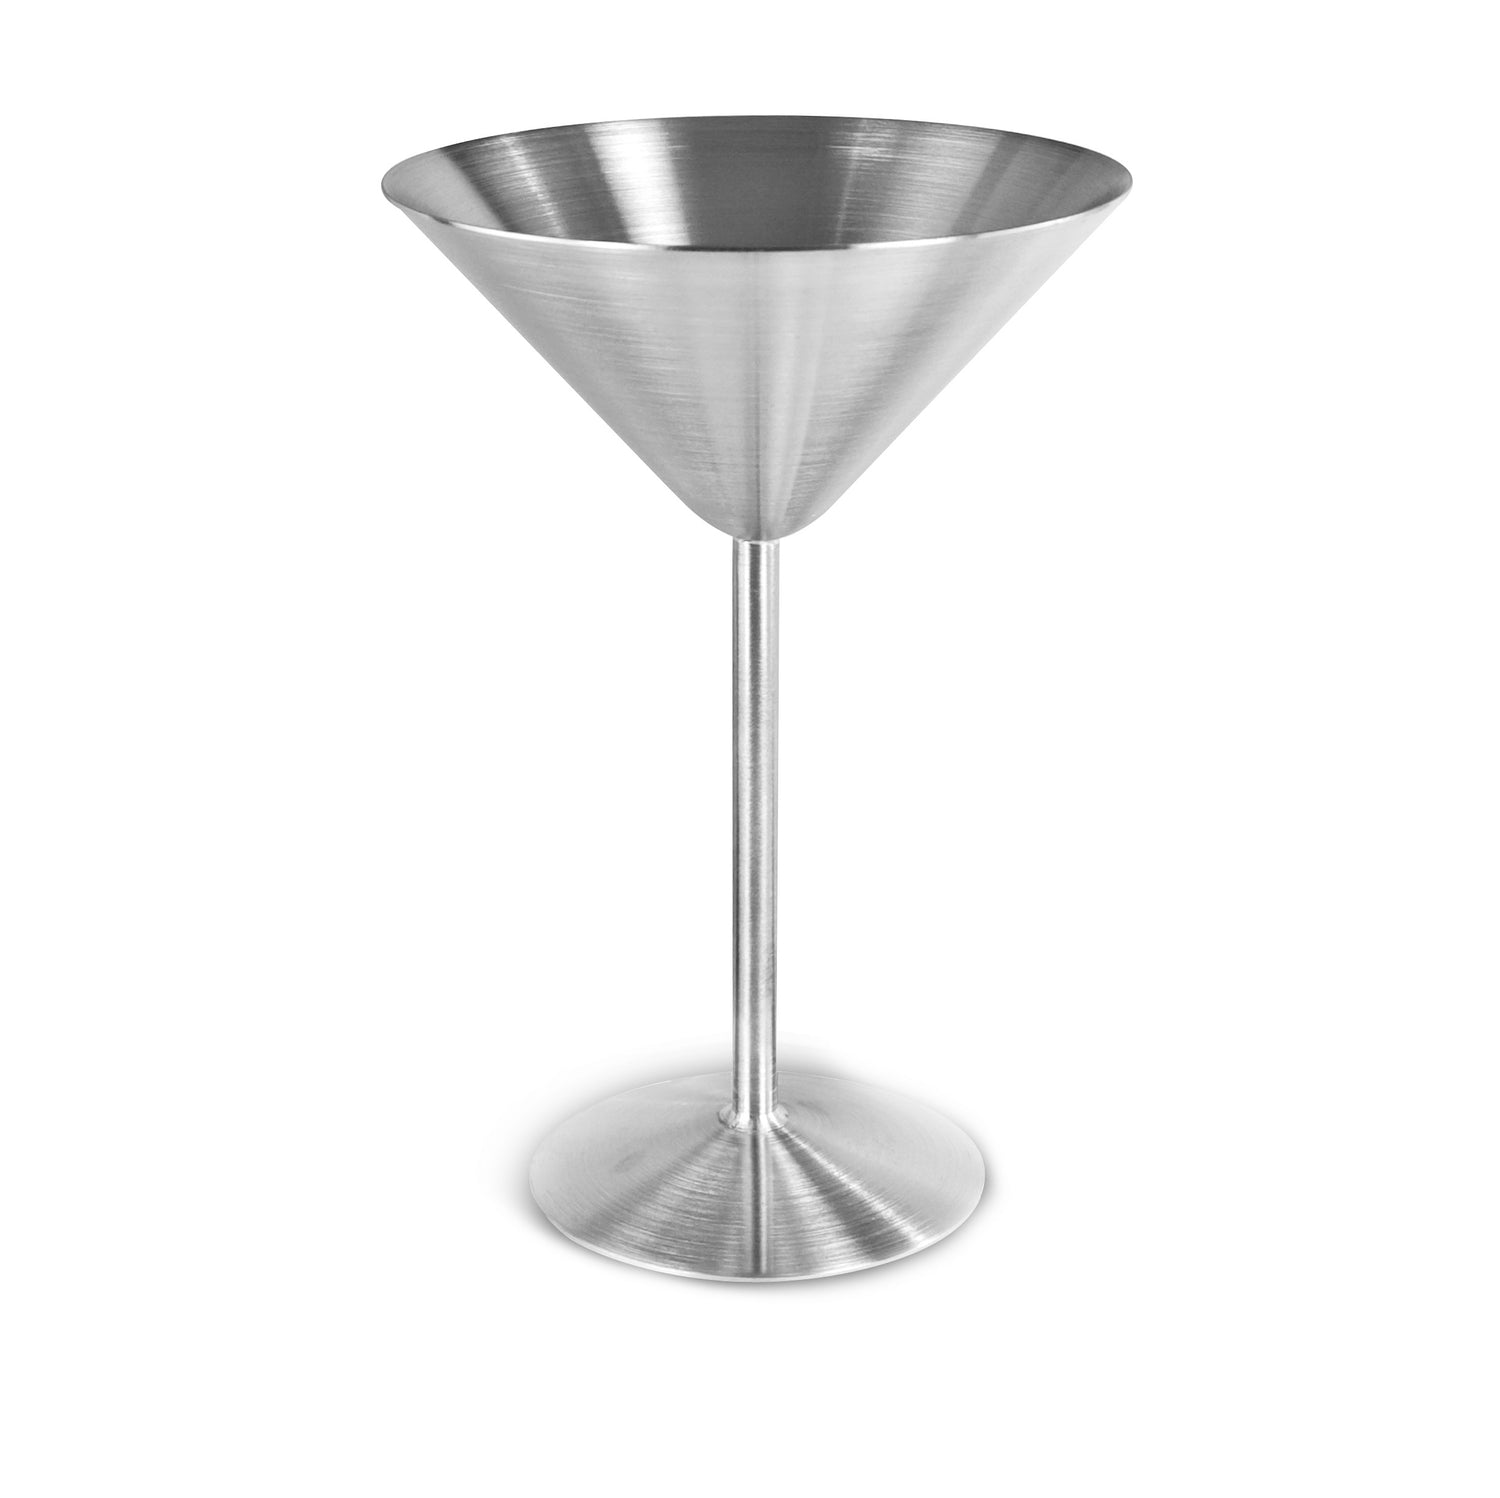 Martini goblet